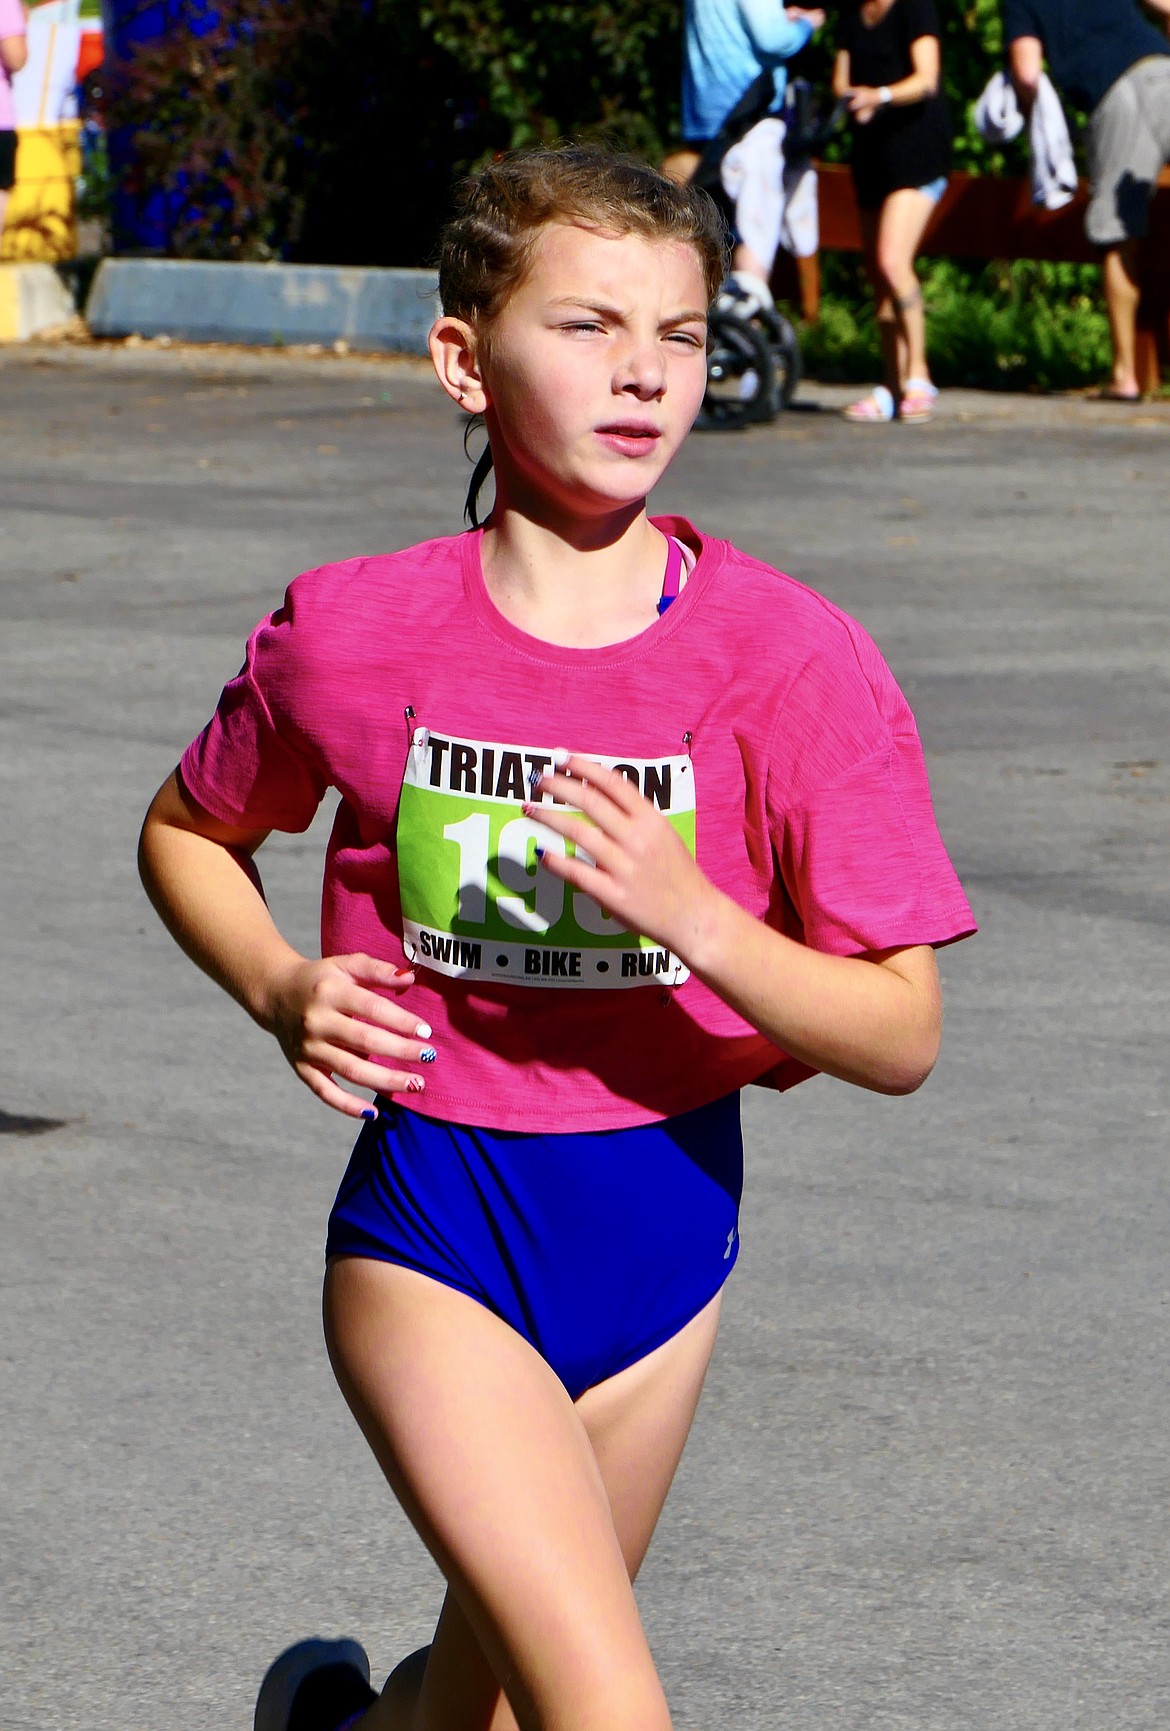 Norah Huff, 11, starts the running portion of the Logan Health Kids Triathlon at Woodland Park in Kalispell on Saturday, July 16. (Matt Baldwin/Daily Inter Lake)